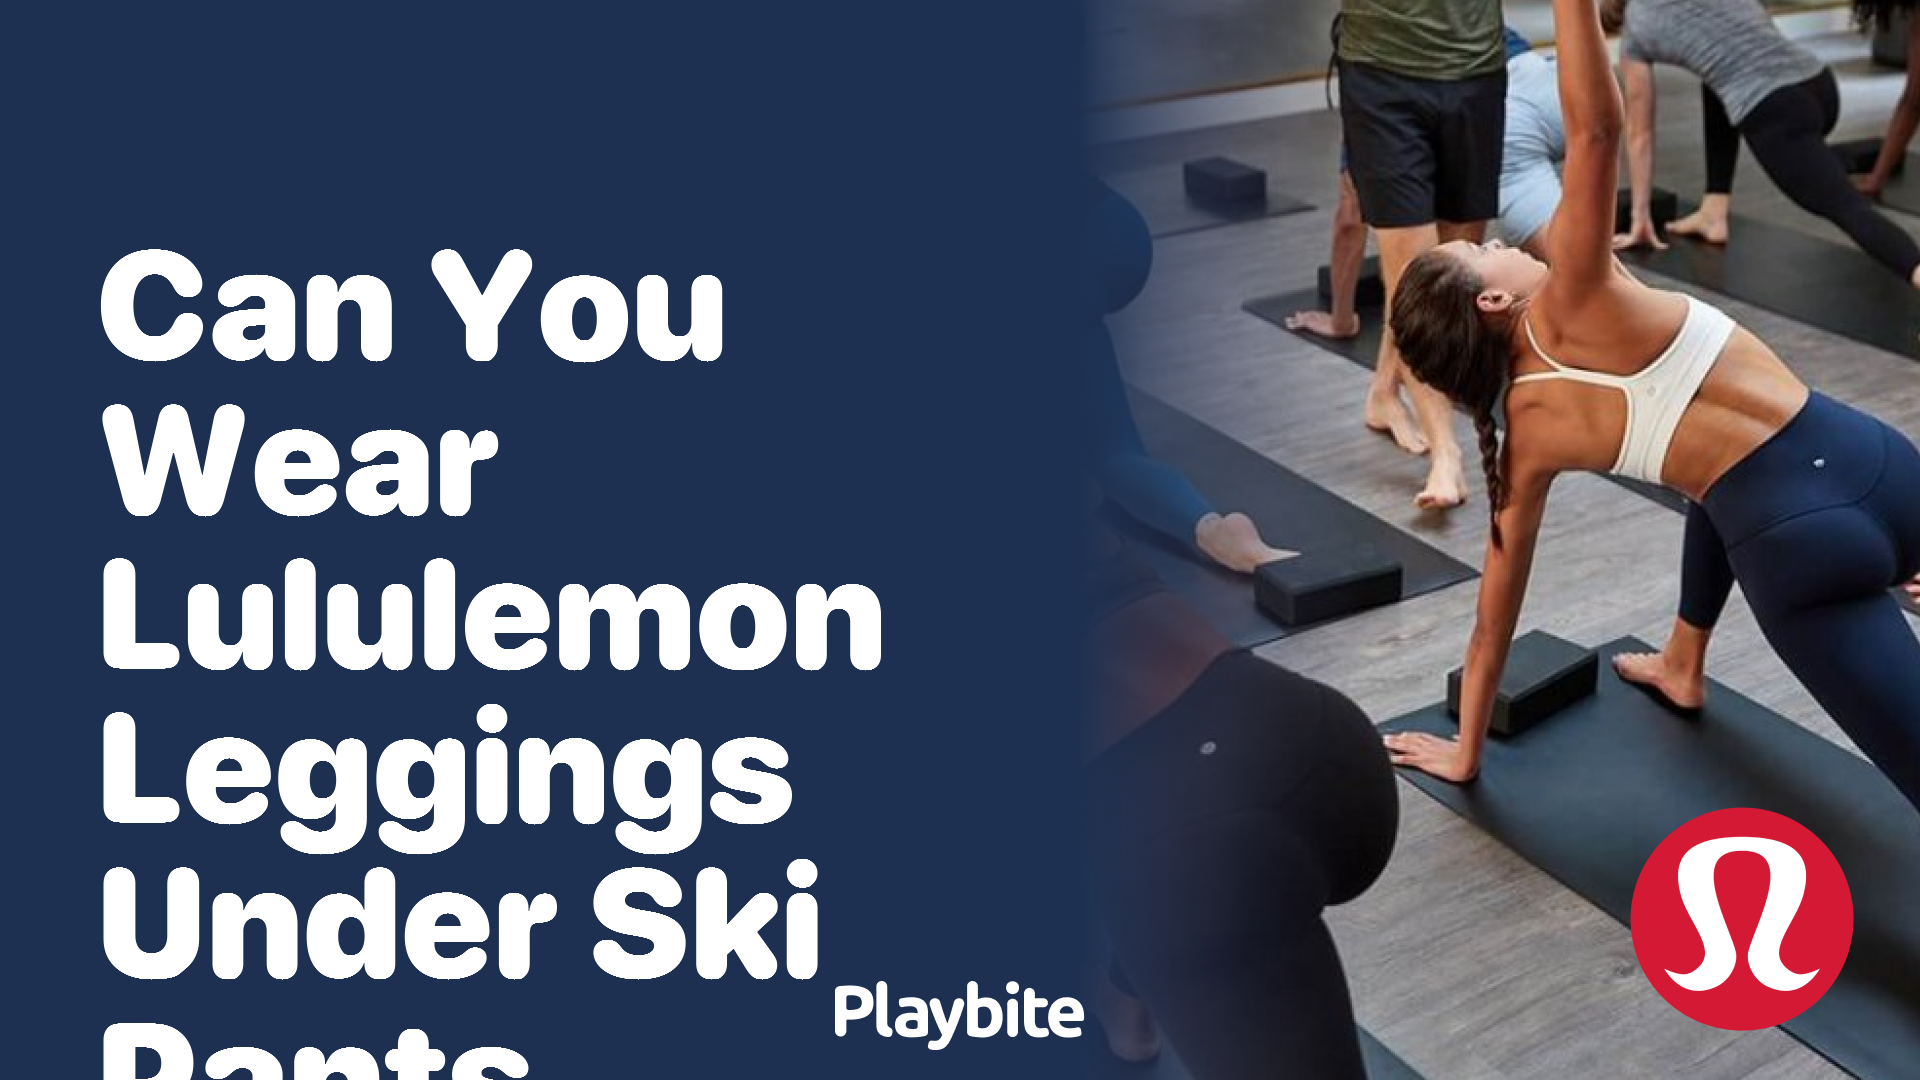 Can You Wear Lululemon Leggings Under Ski Pants? - Playbite